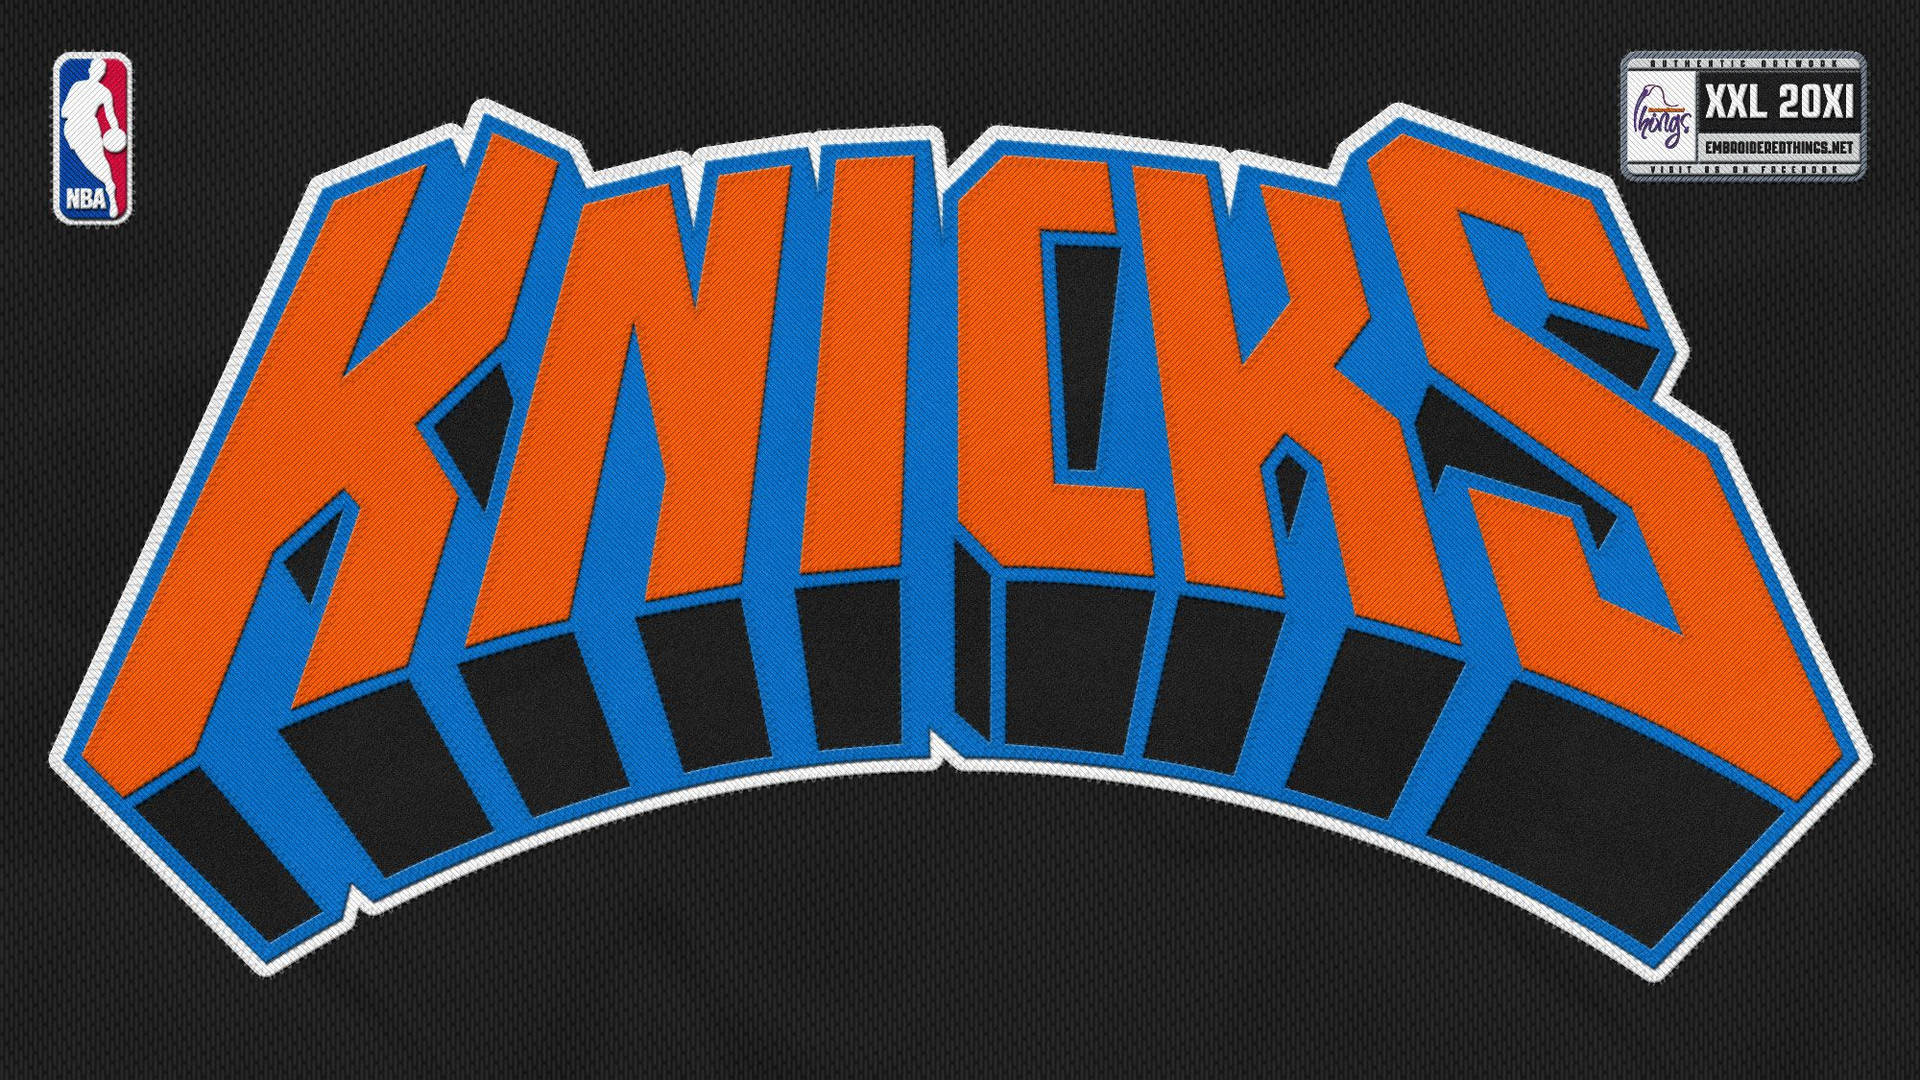 New York Knicks Classic Team Logo Background